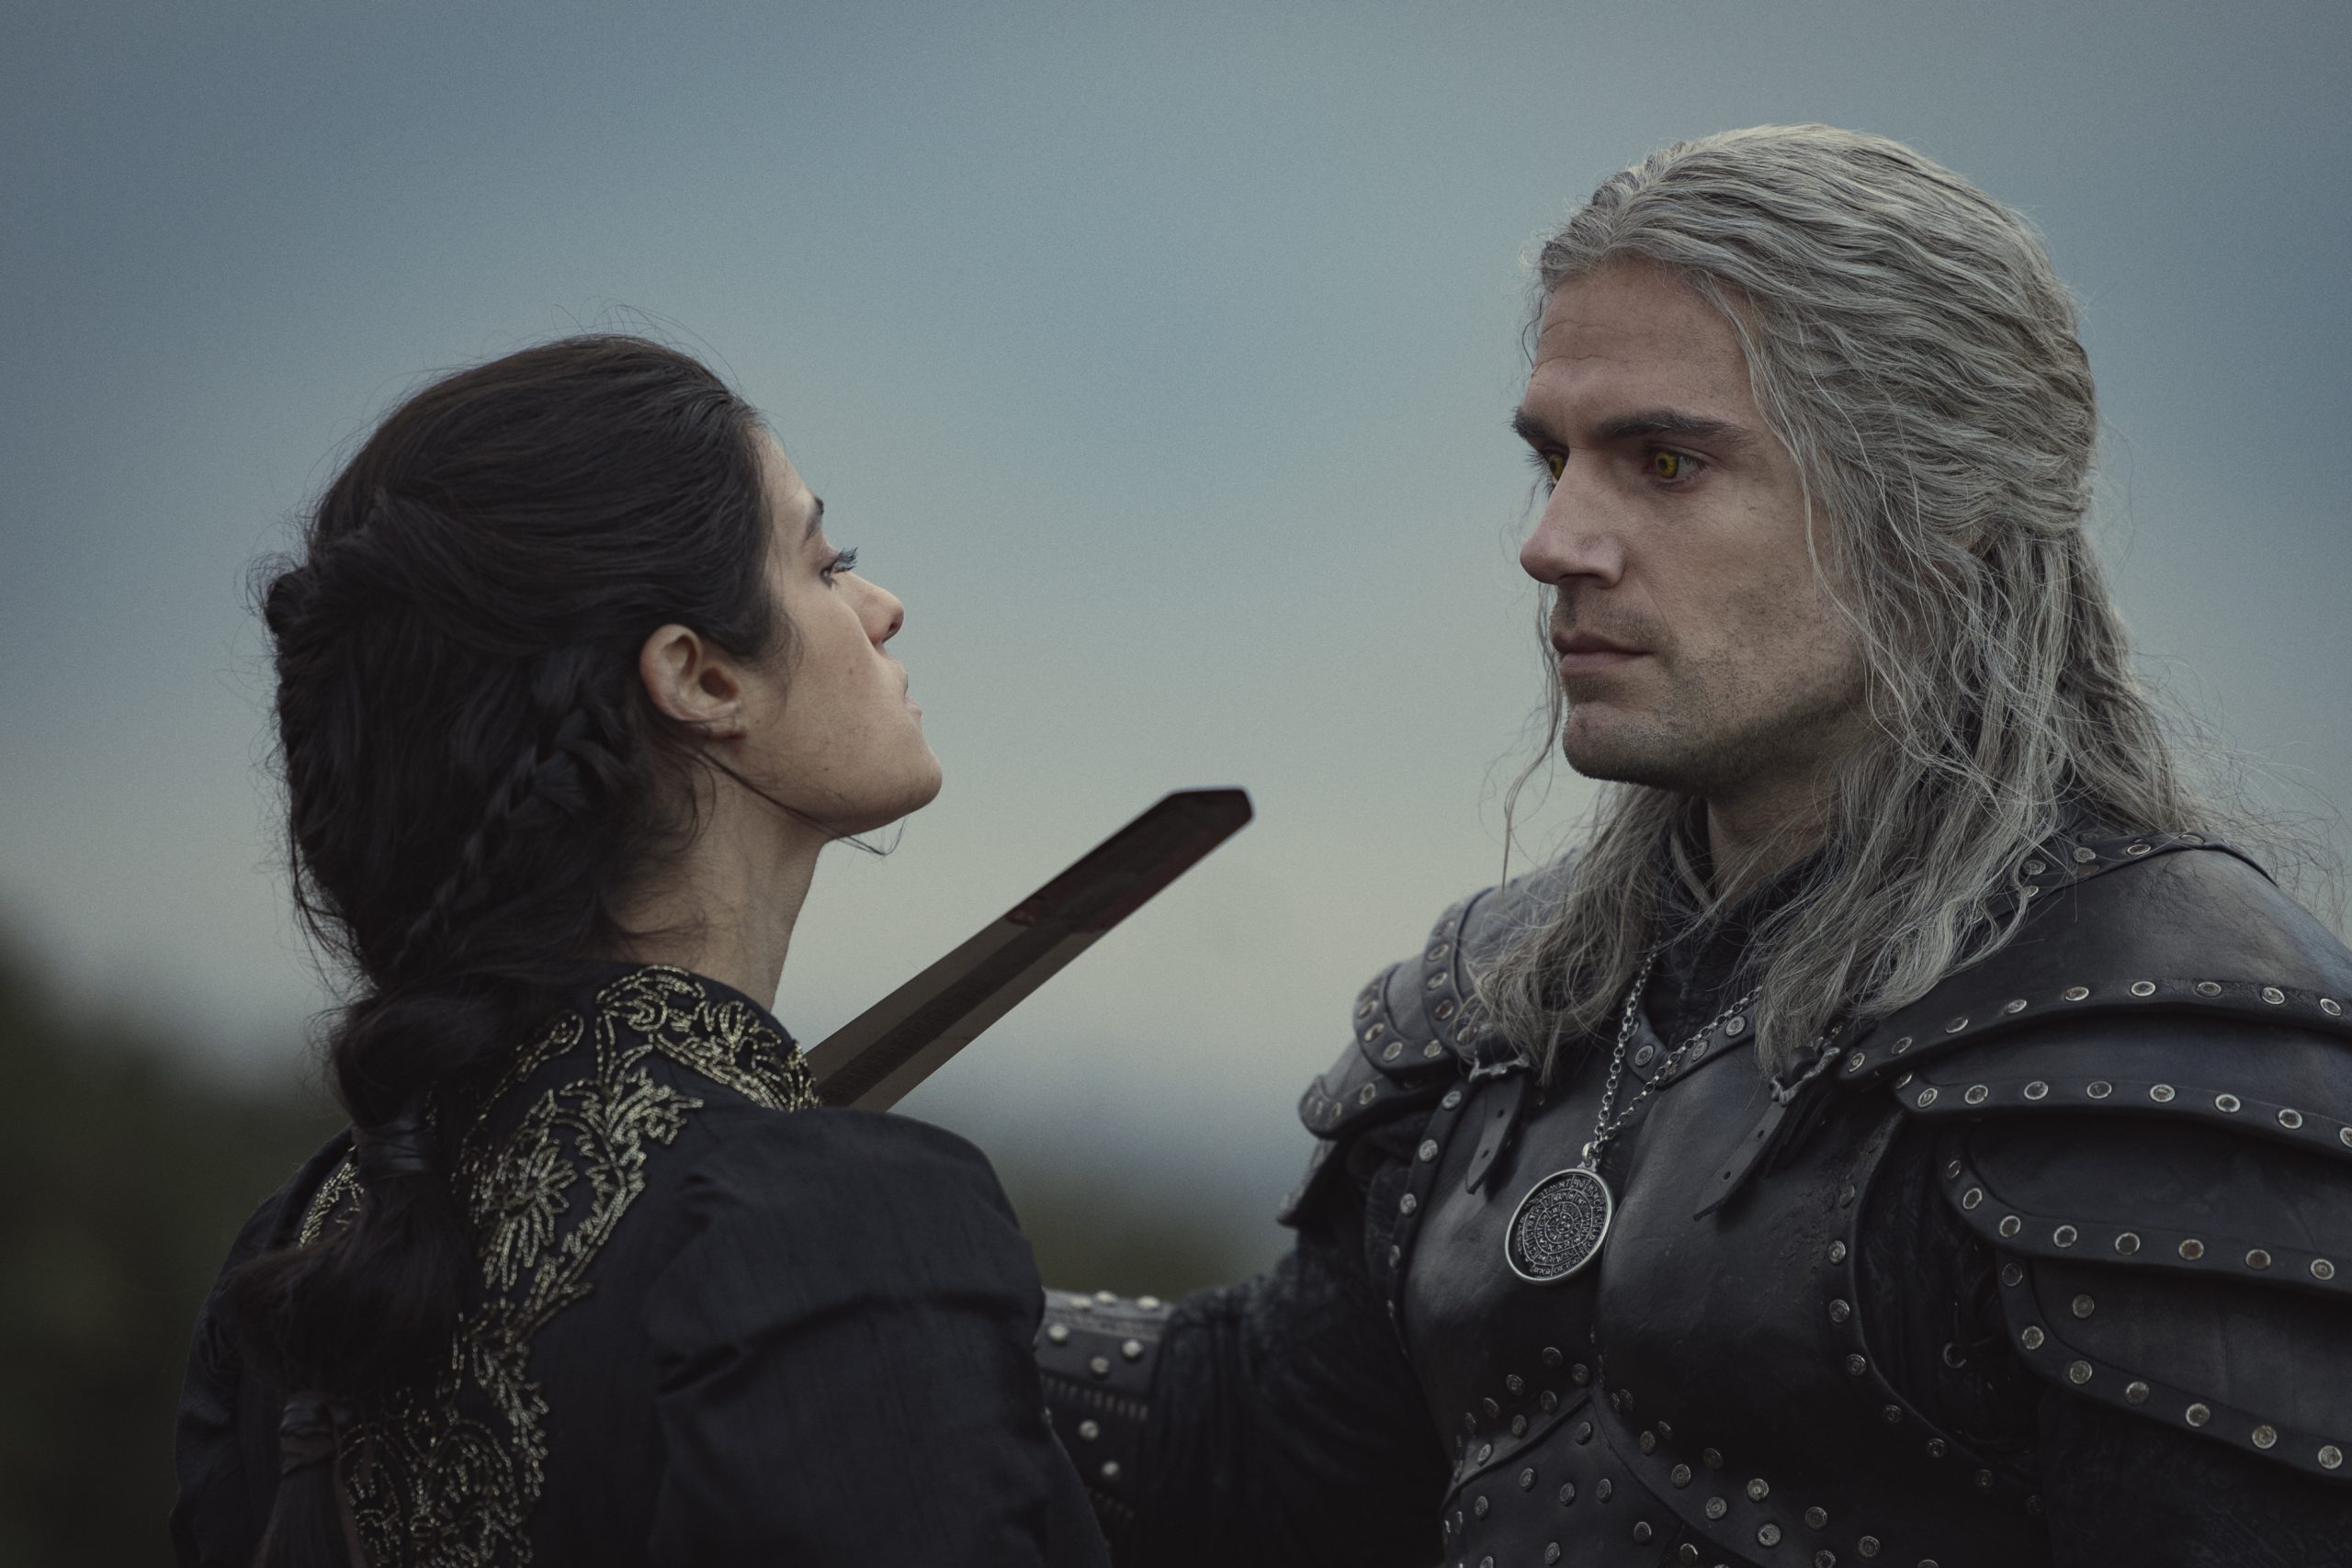 Geralt (Henry Cavill) demands information from Yennefer (Anya Chalotra) in The Witcher Season 2 Episode 7 “Voleth Meir” (2021), Netflix